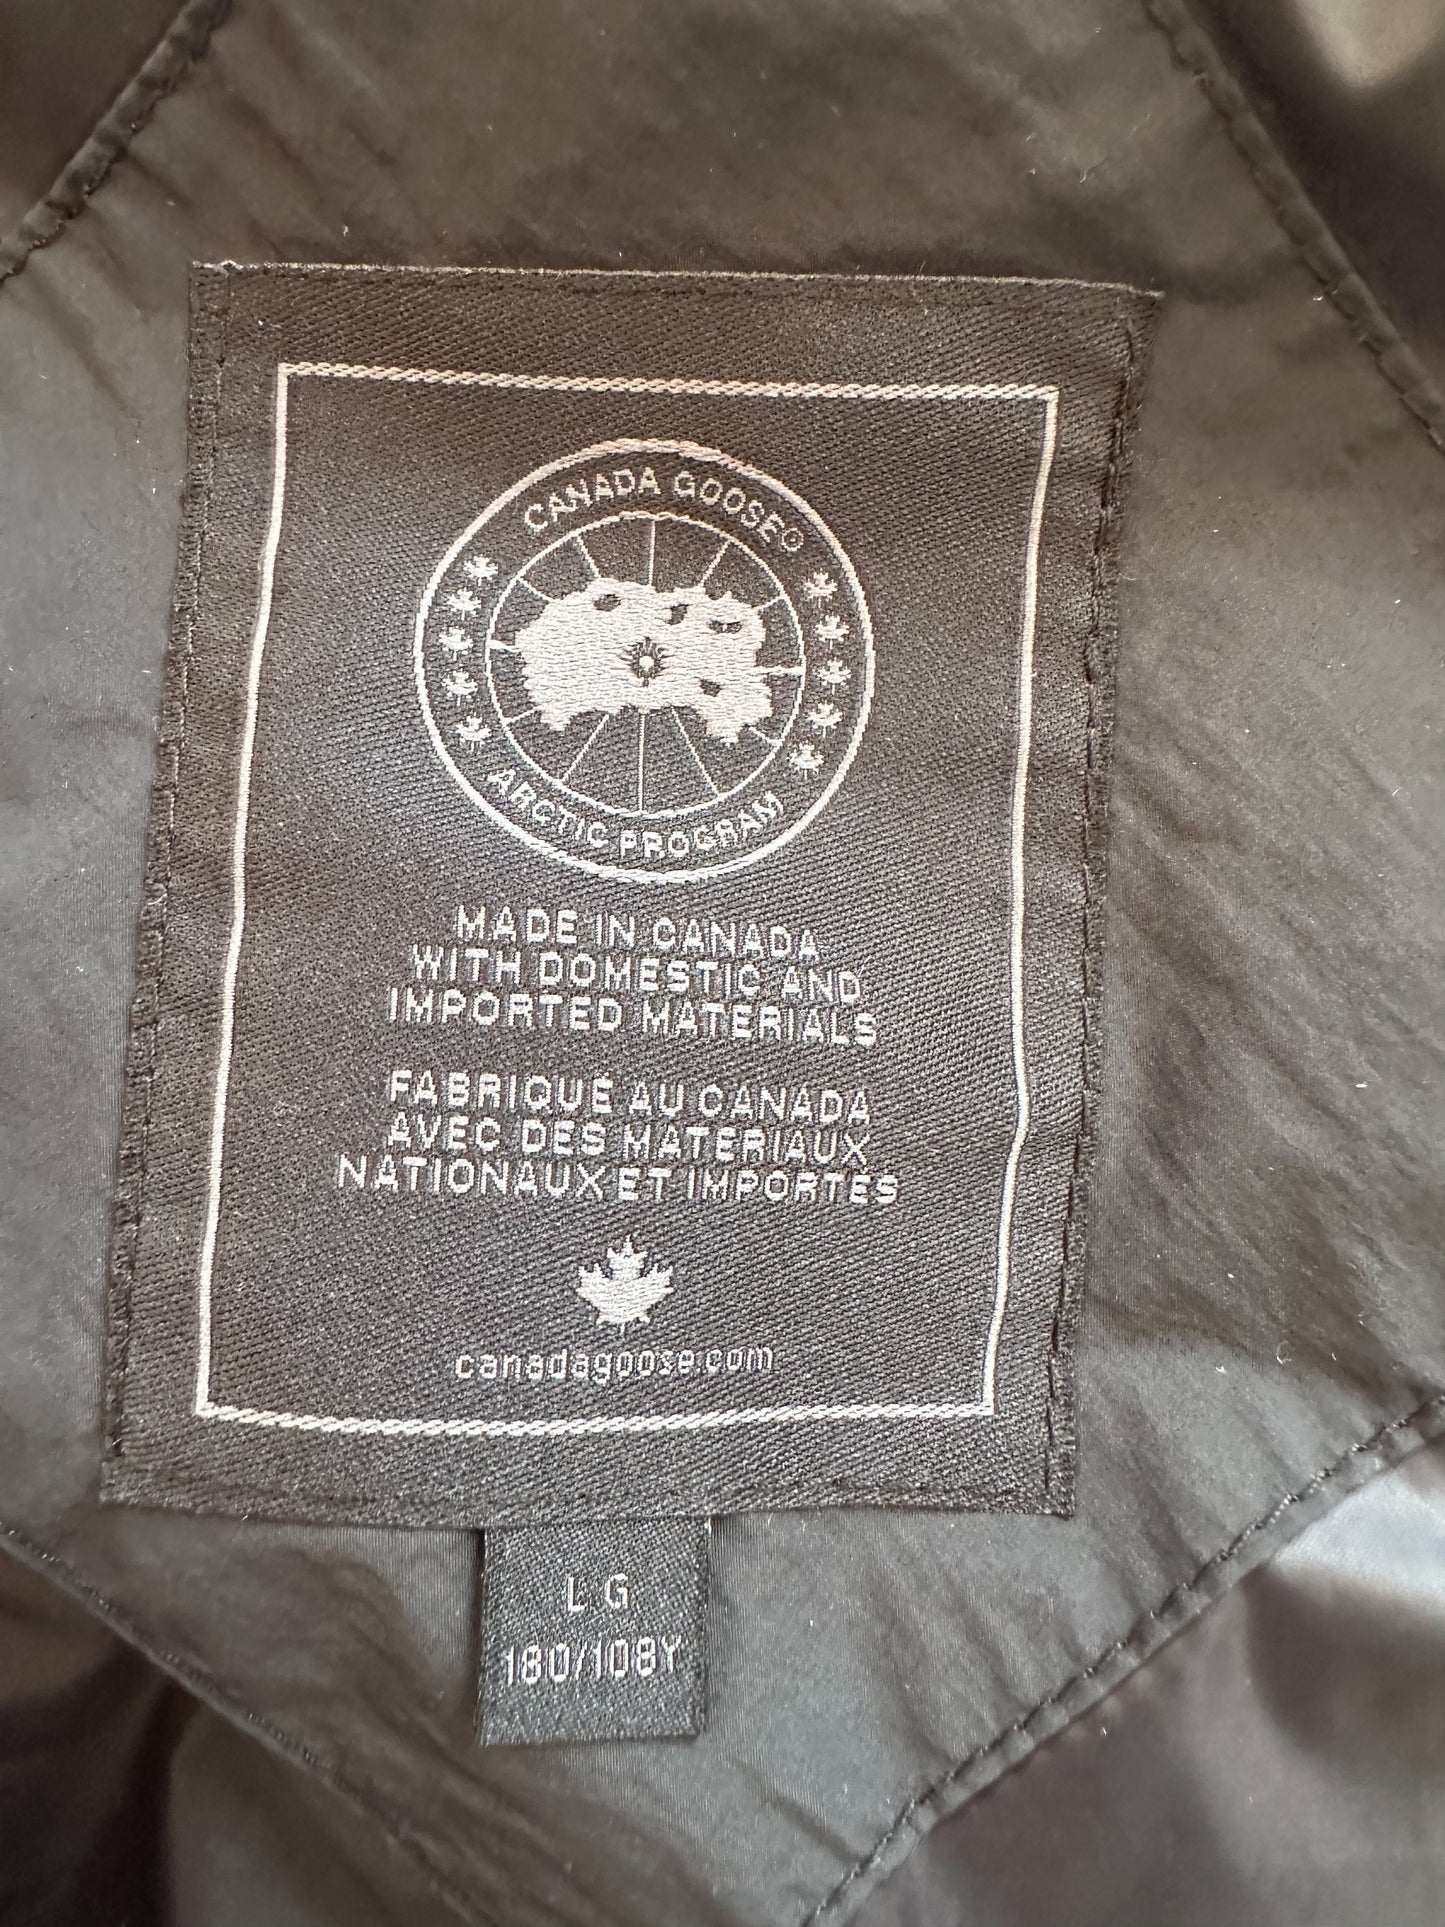 Canada Goose Black Everett Black Label Men's Jacket